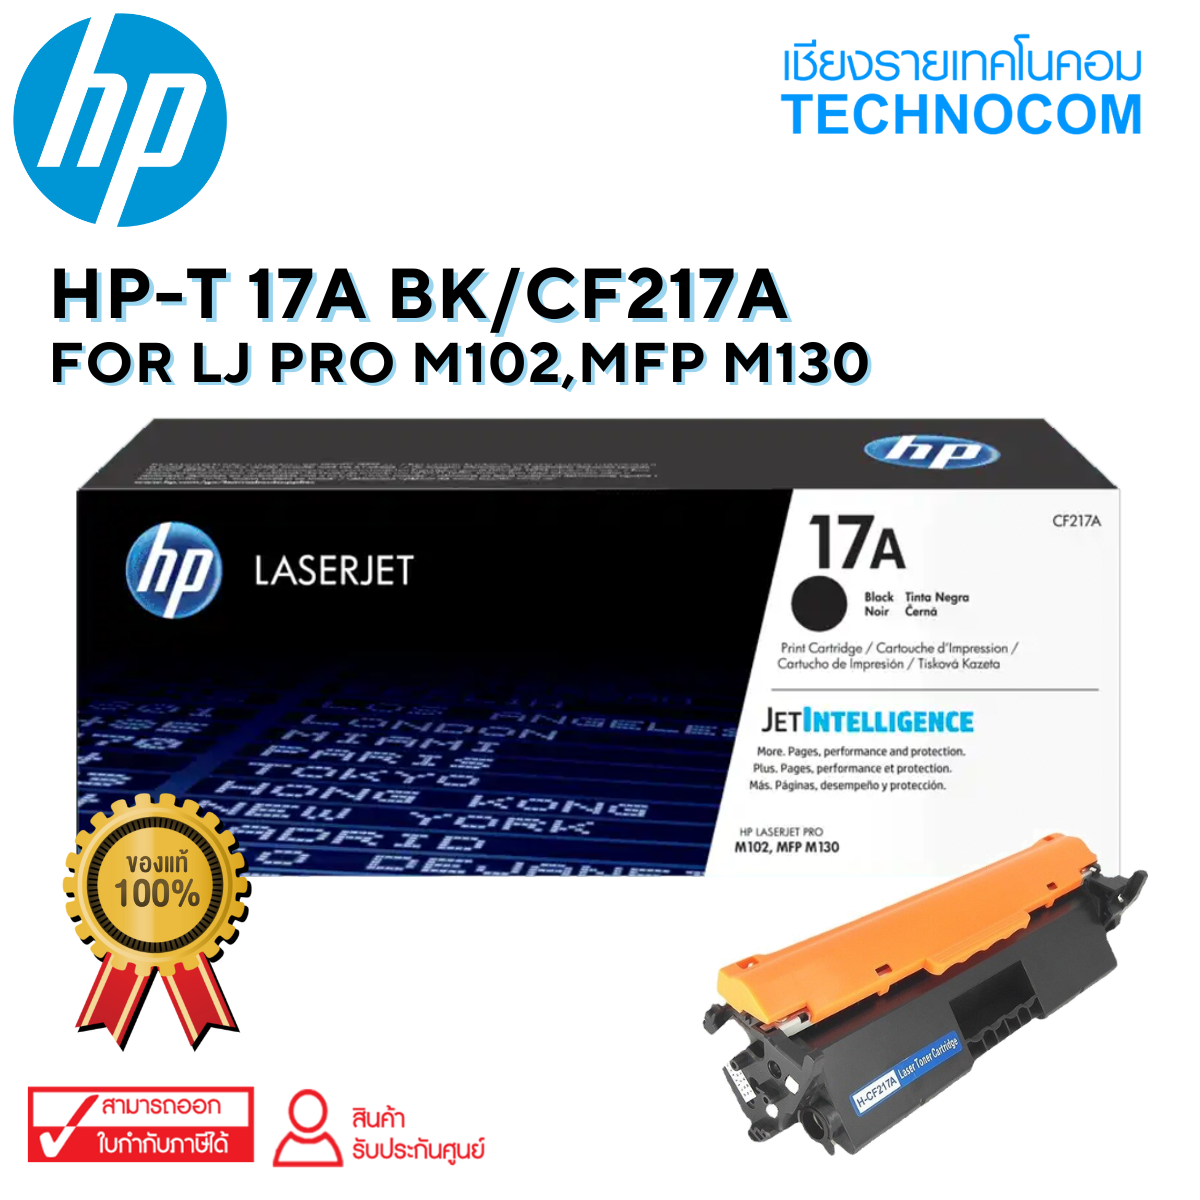 HP-T 17A BK/CF217A For LJ PRO M102,MFP M130